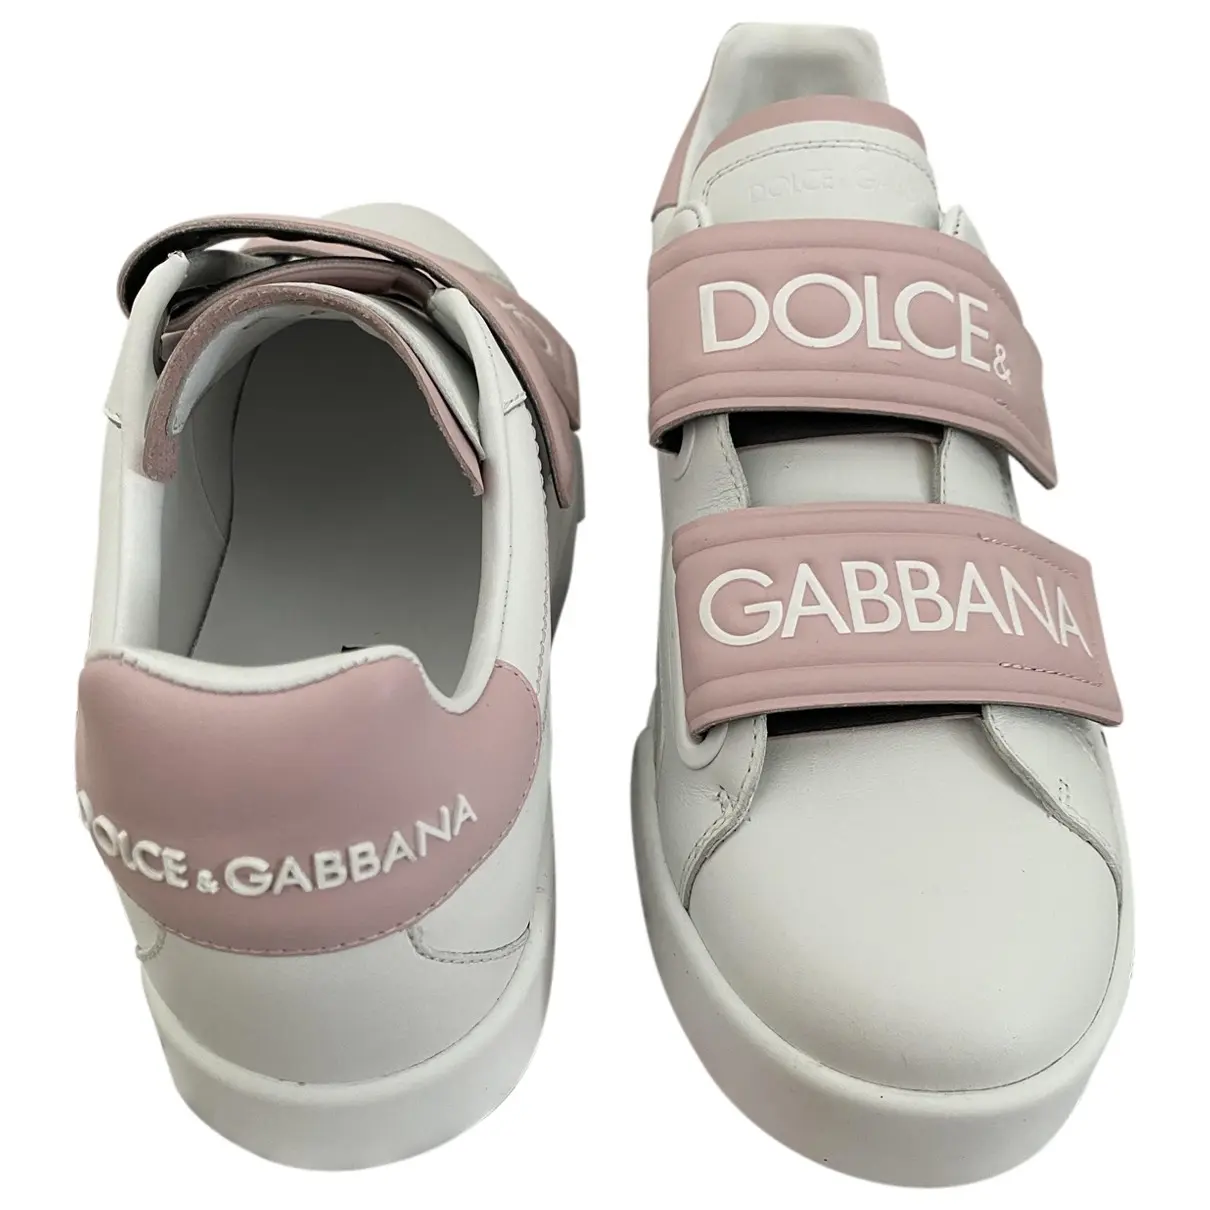 Portofino leather trainers Dolce & Gabbana